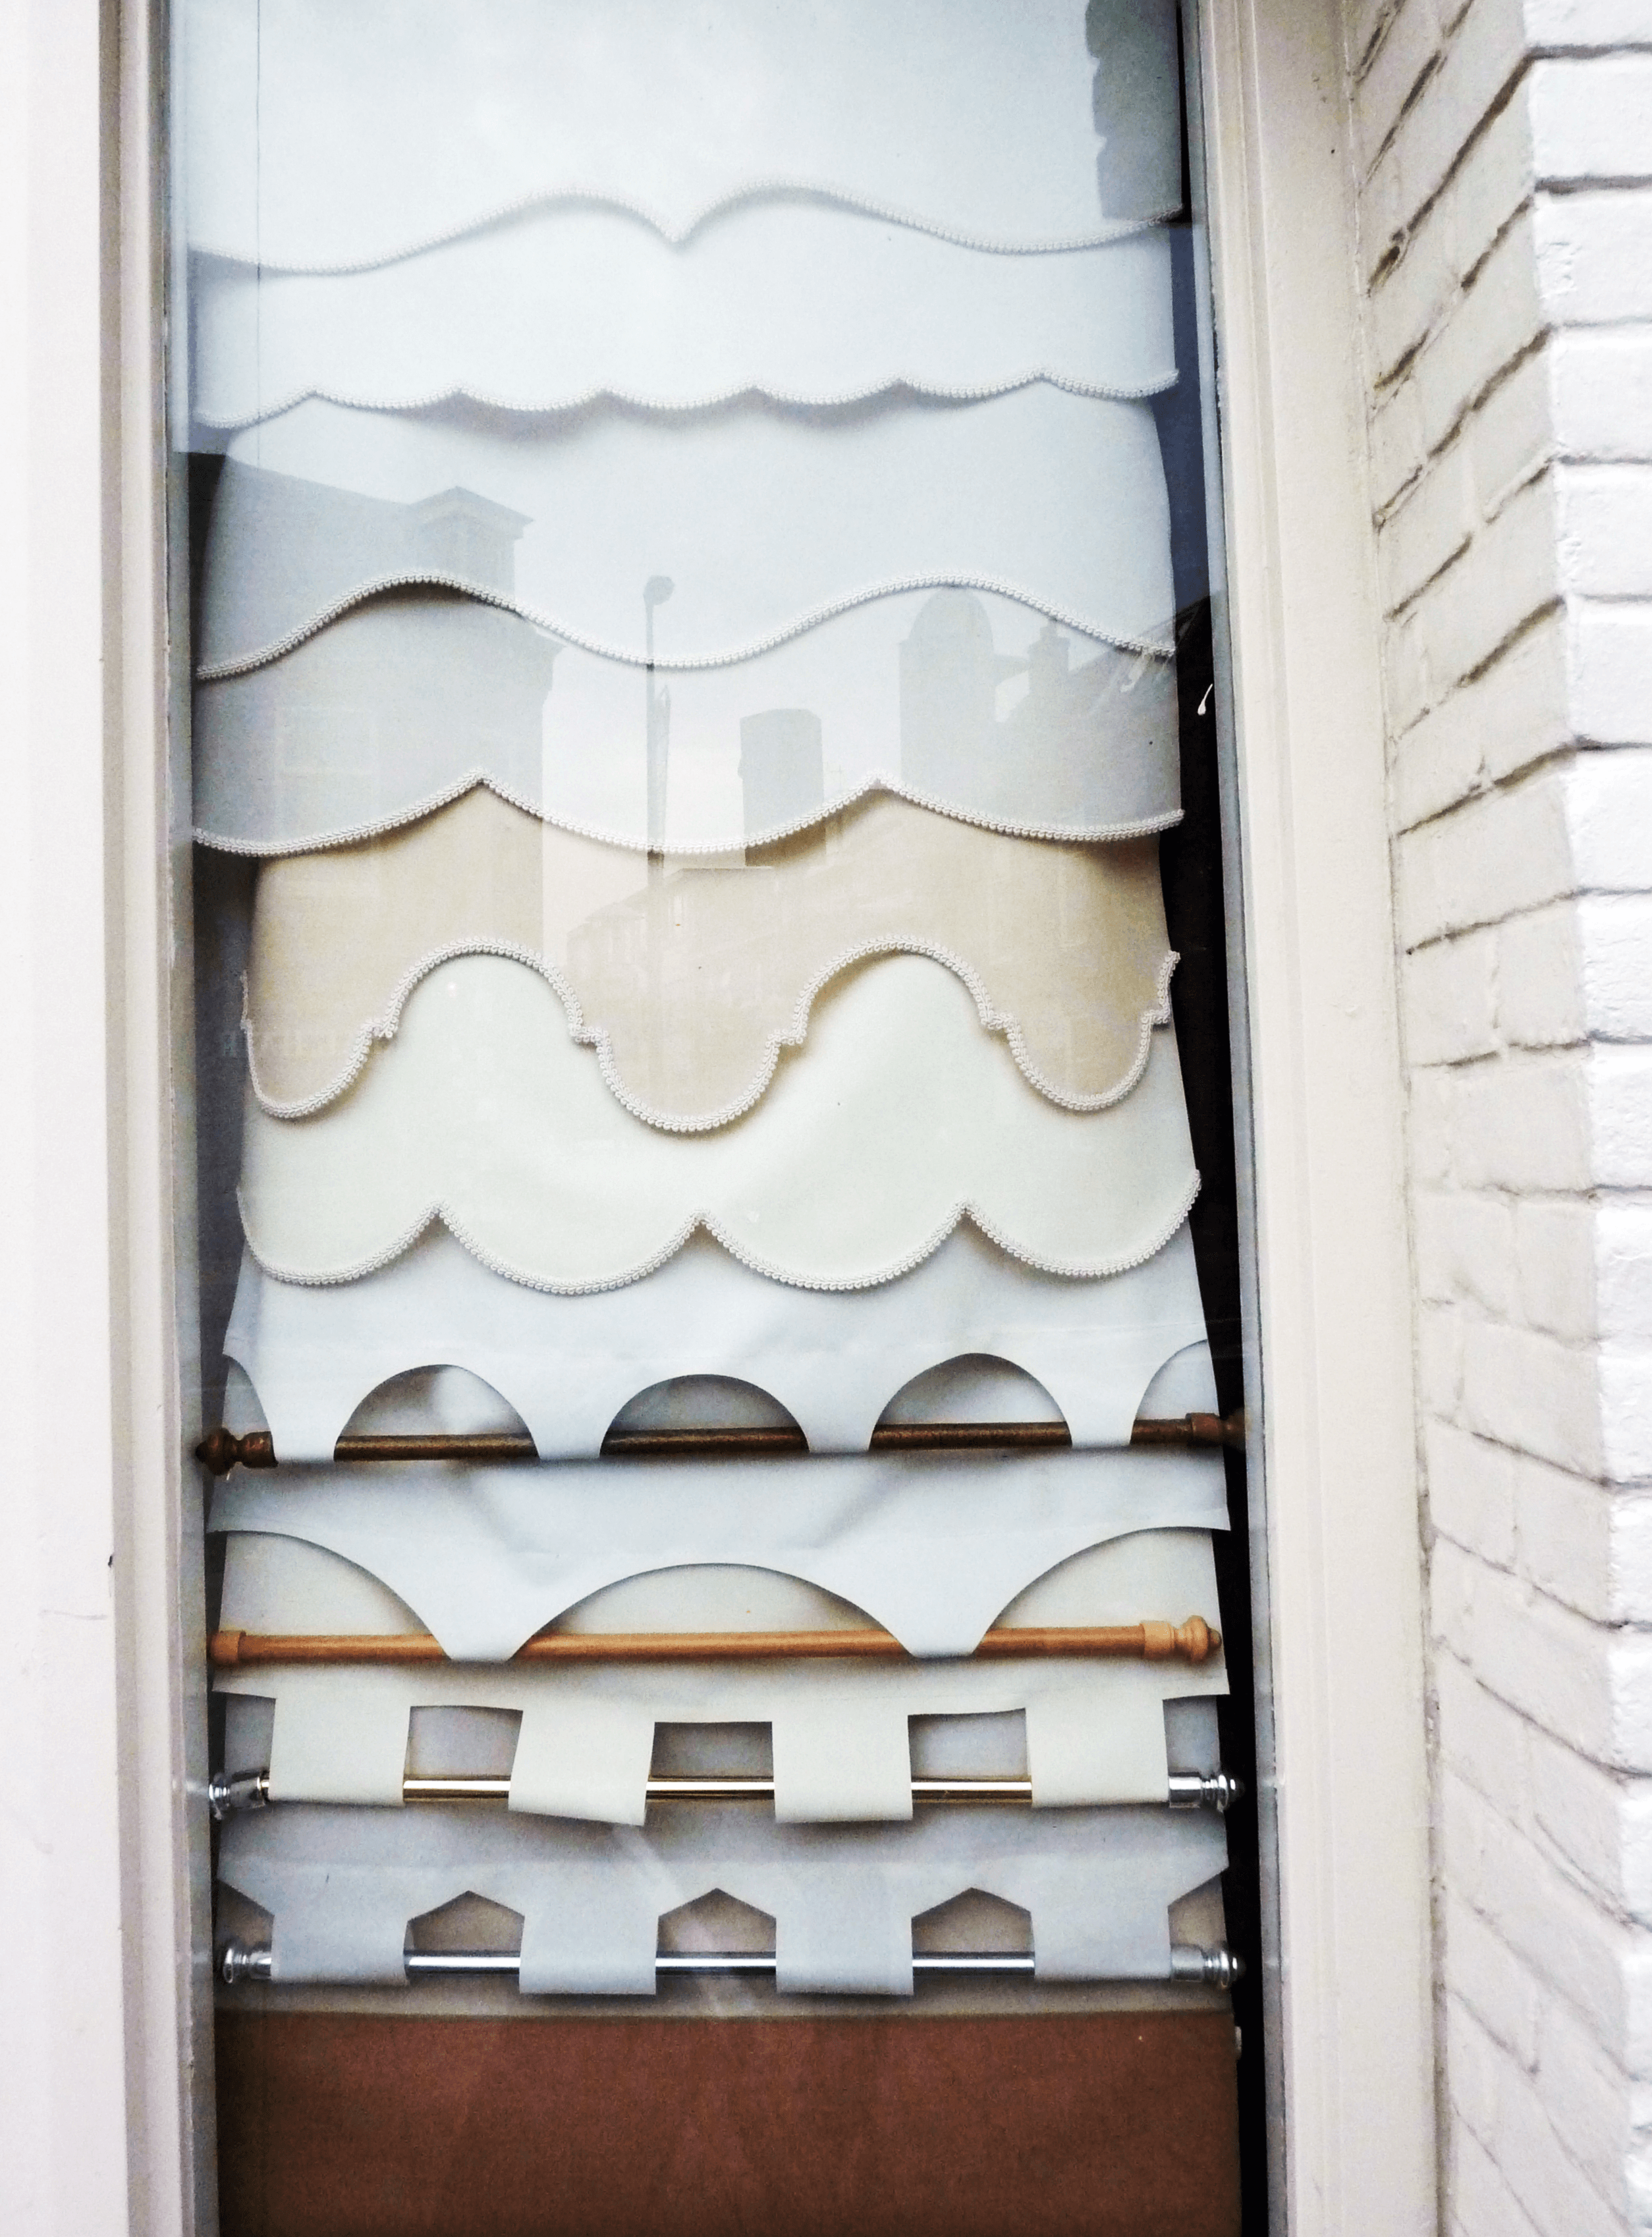 Curtains, 2014